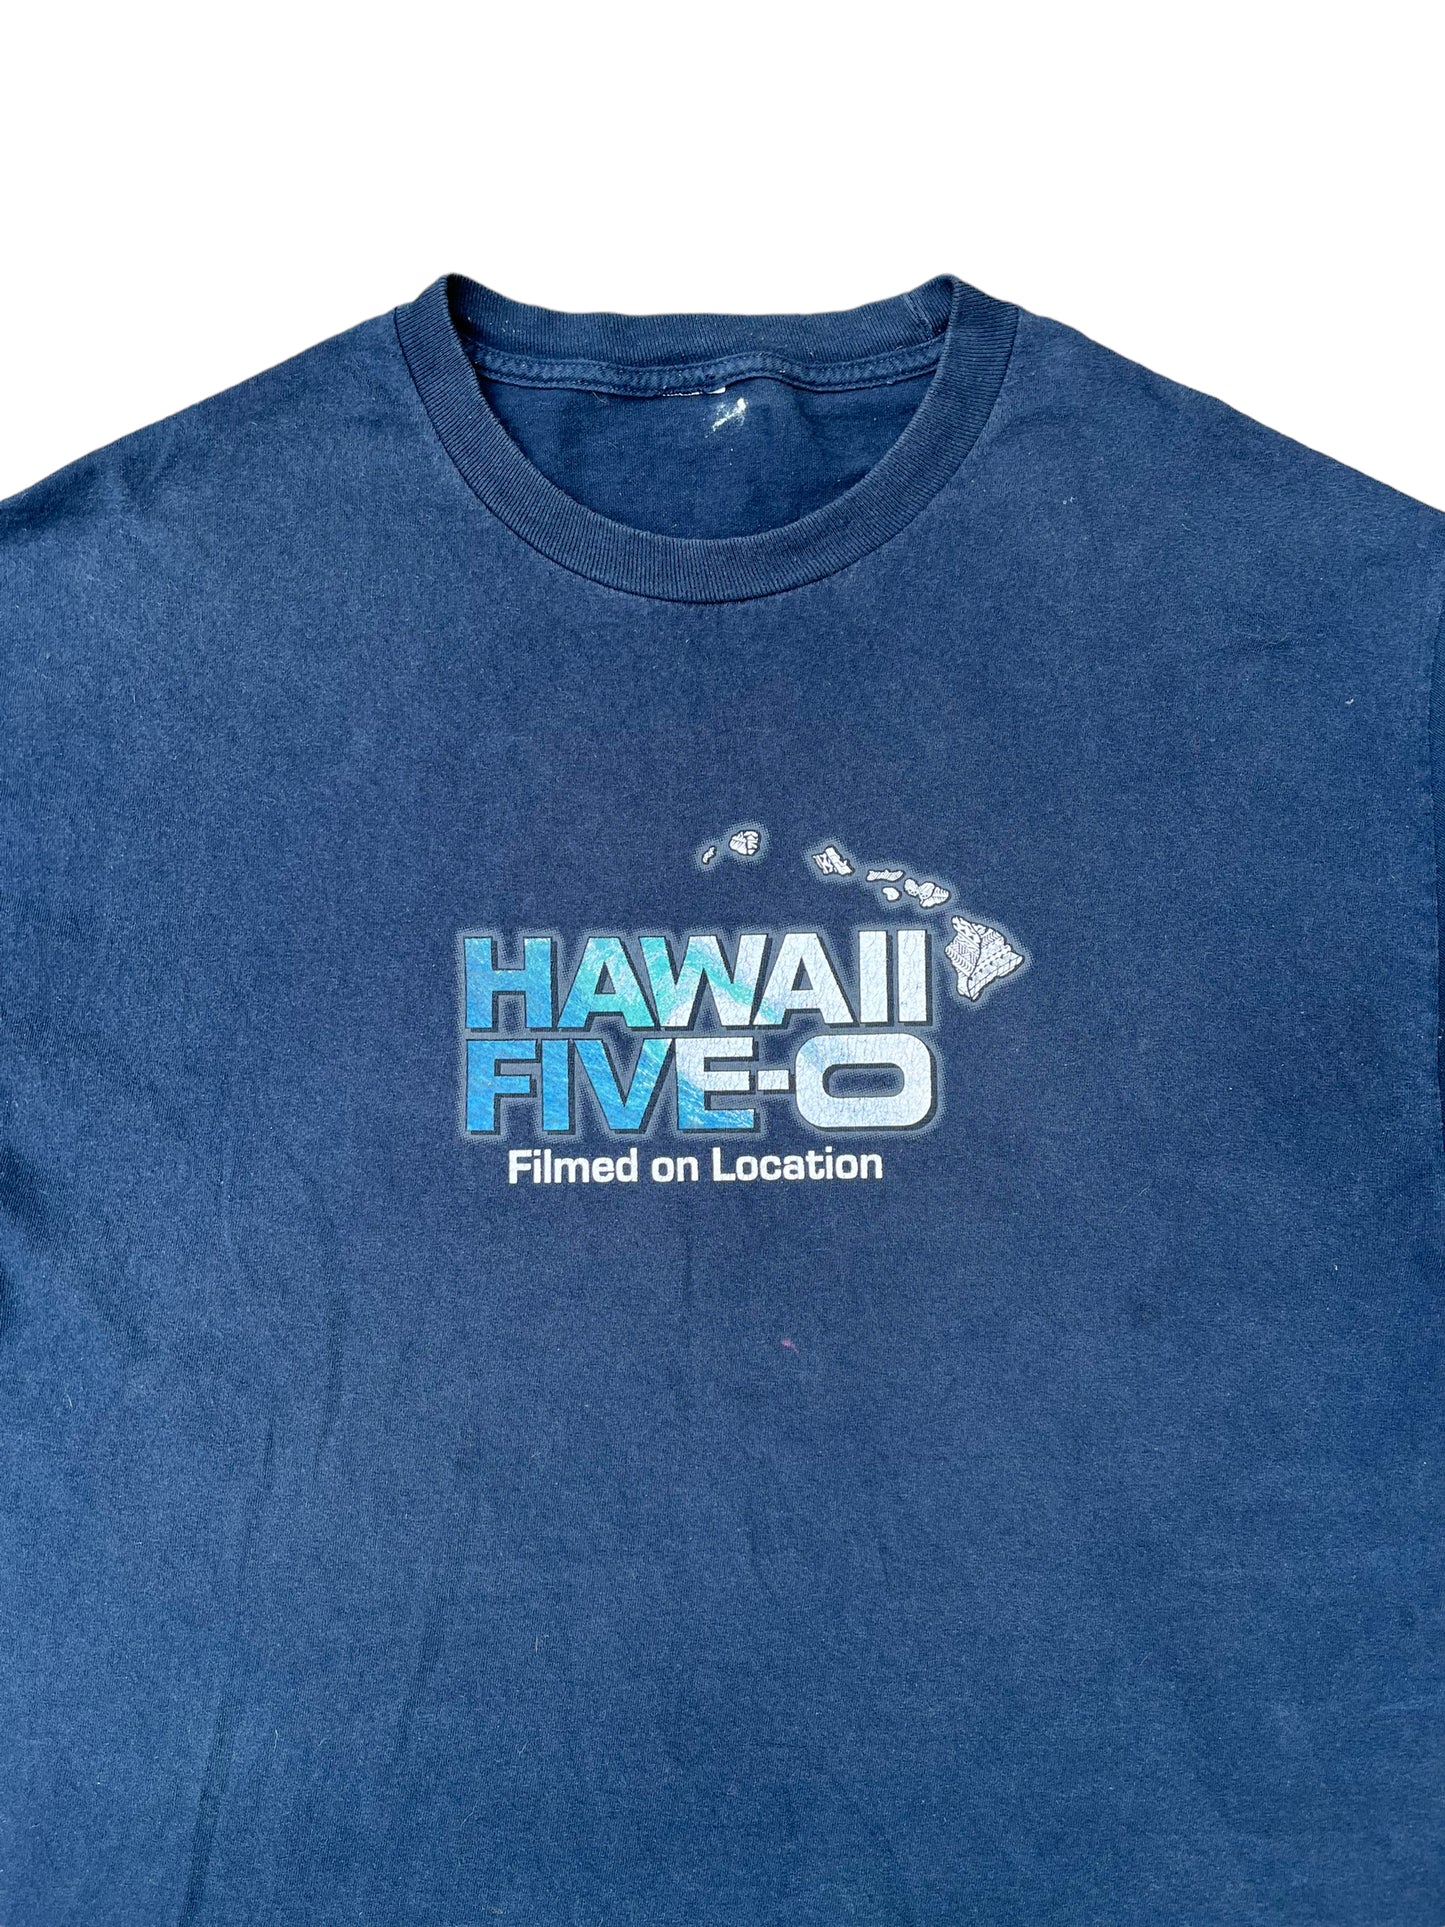 Vintage Hawaii Five-0 Tee